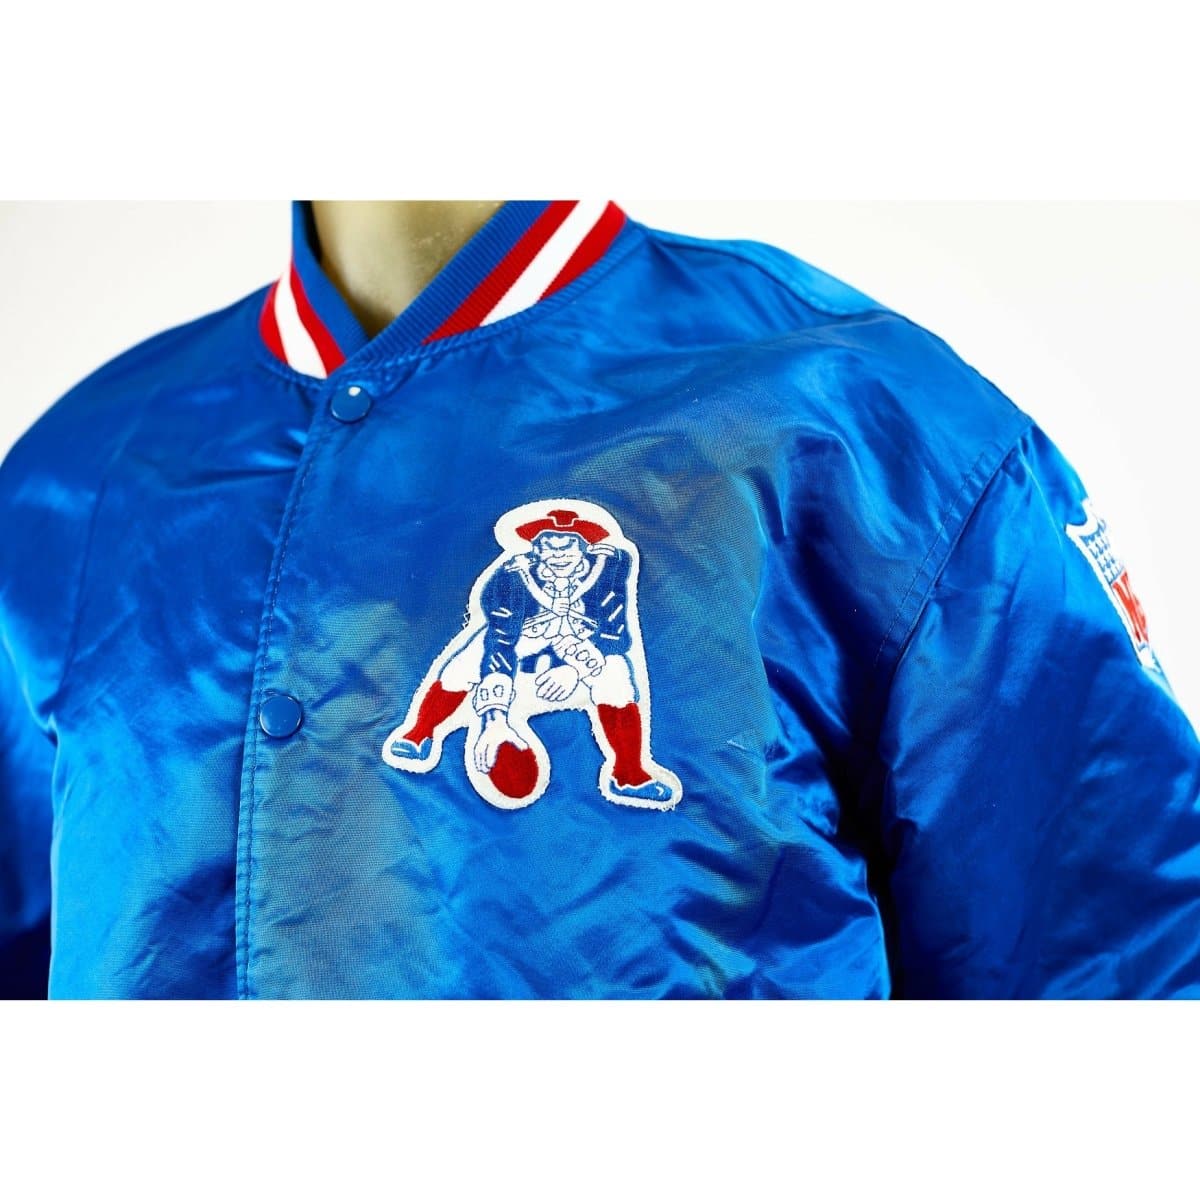 Varsity Club Jacket Large RESERVED - Vintage New England Patriots Starter Jacket